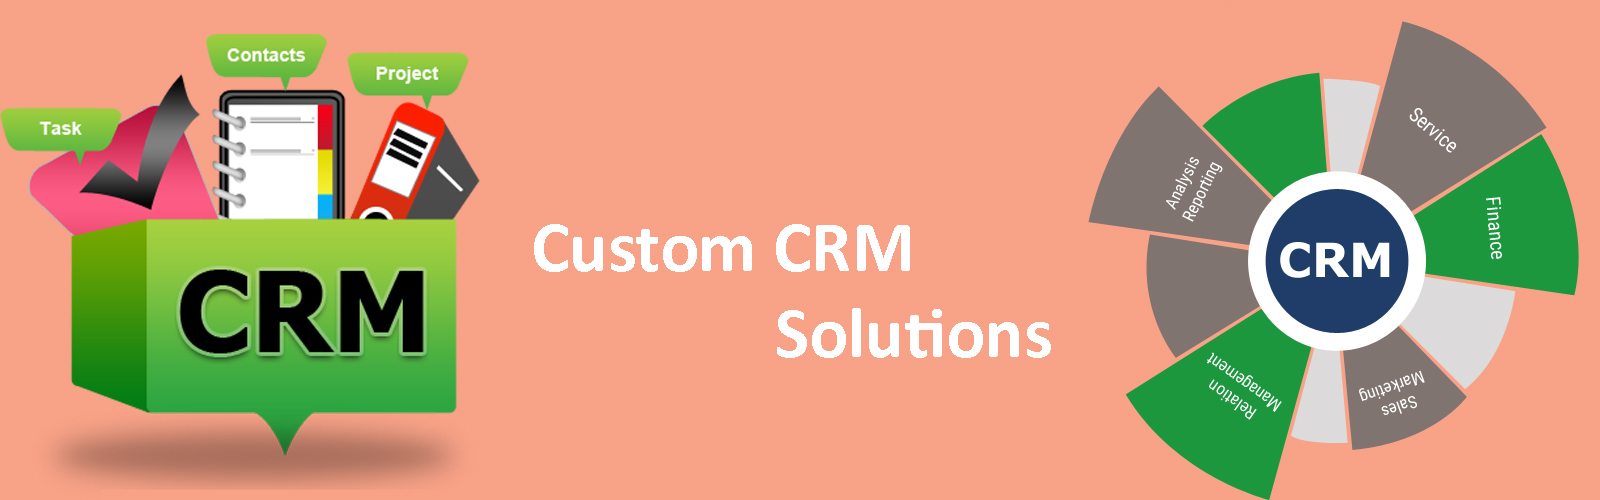 custom-crm-solutions